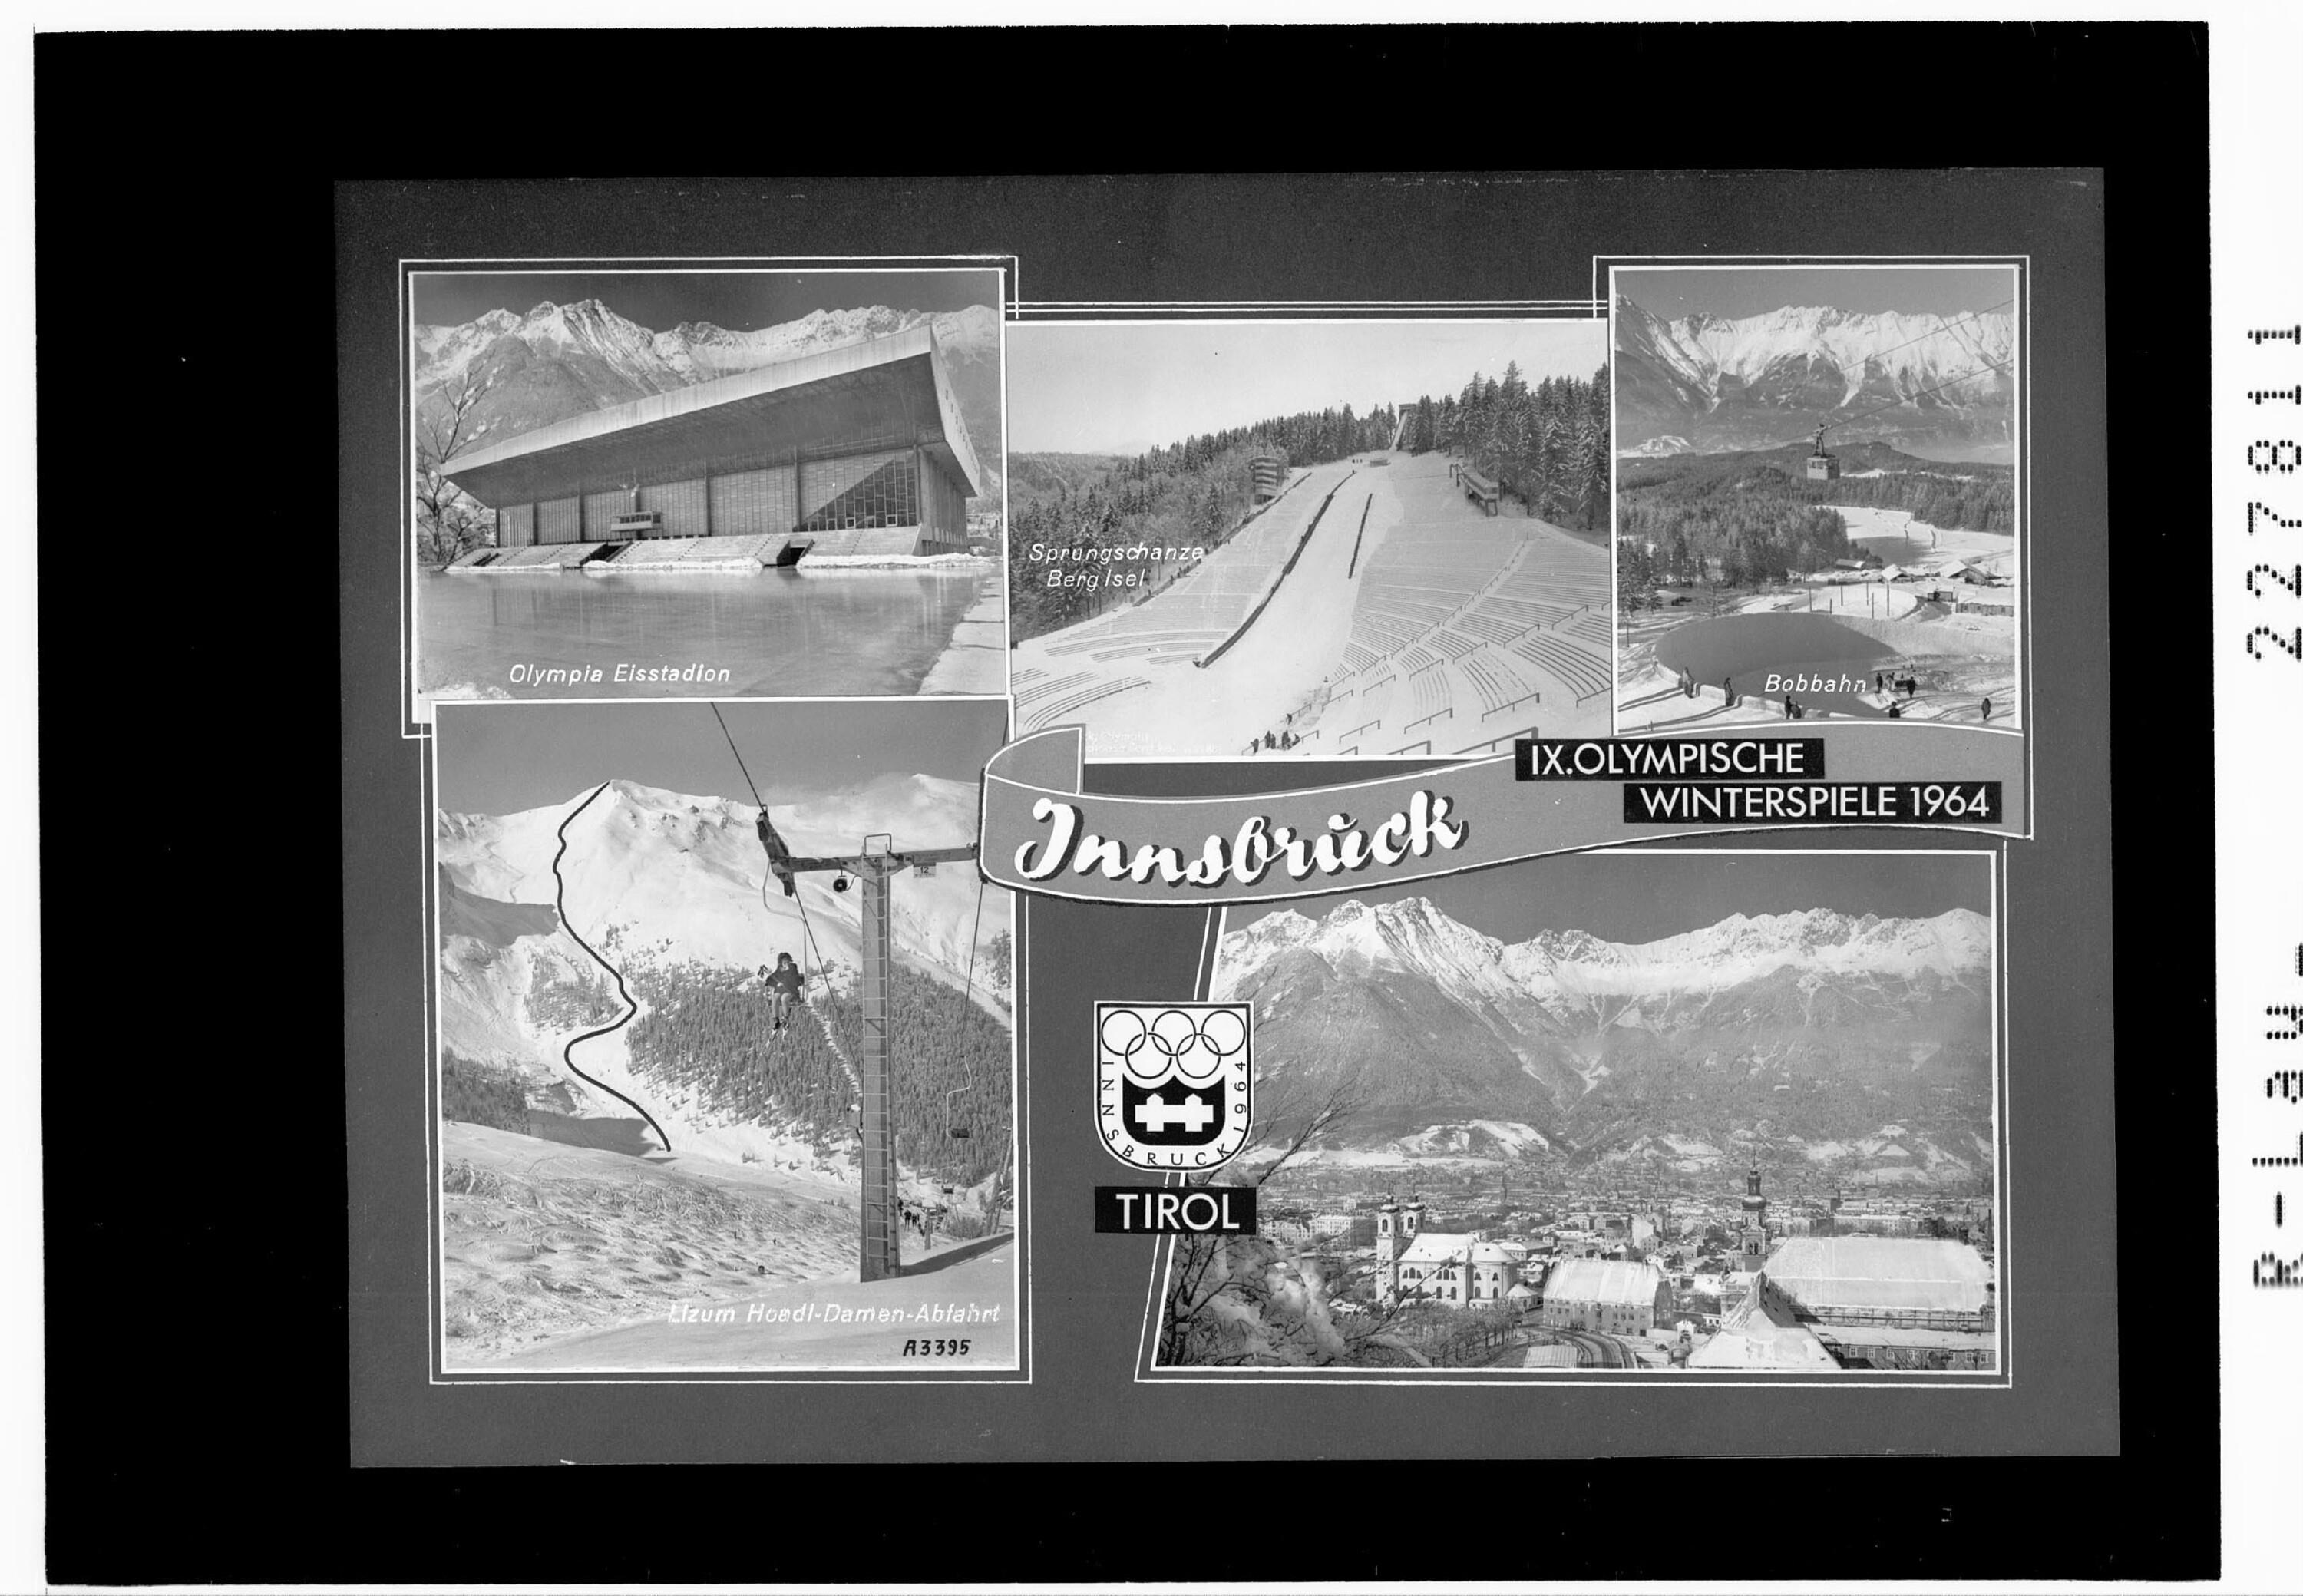 Innsbruck - IX Olympische Winterspiele 1964 / Tirol></div>


    <hr>
    <div class=